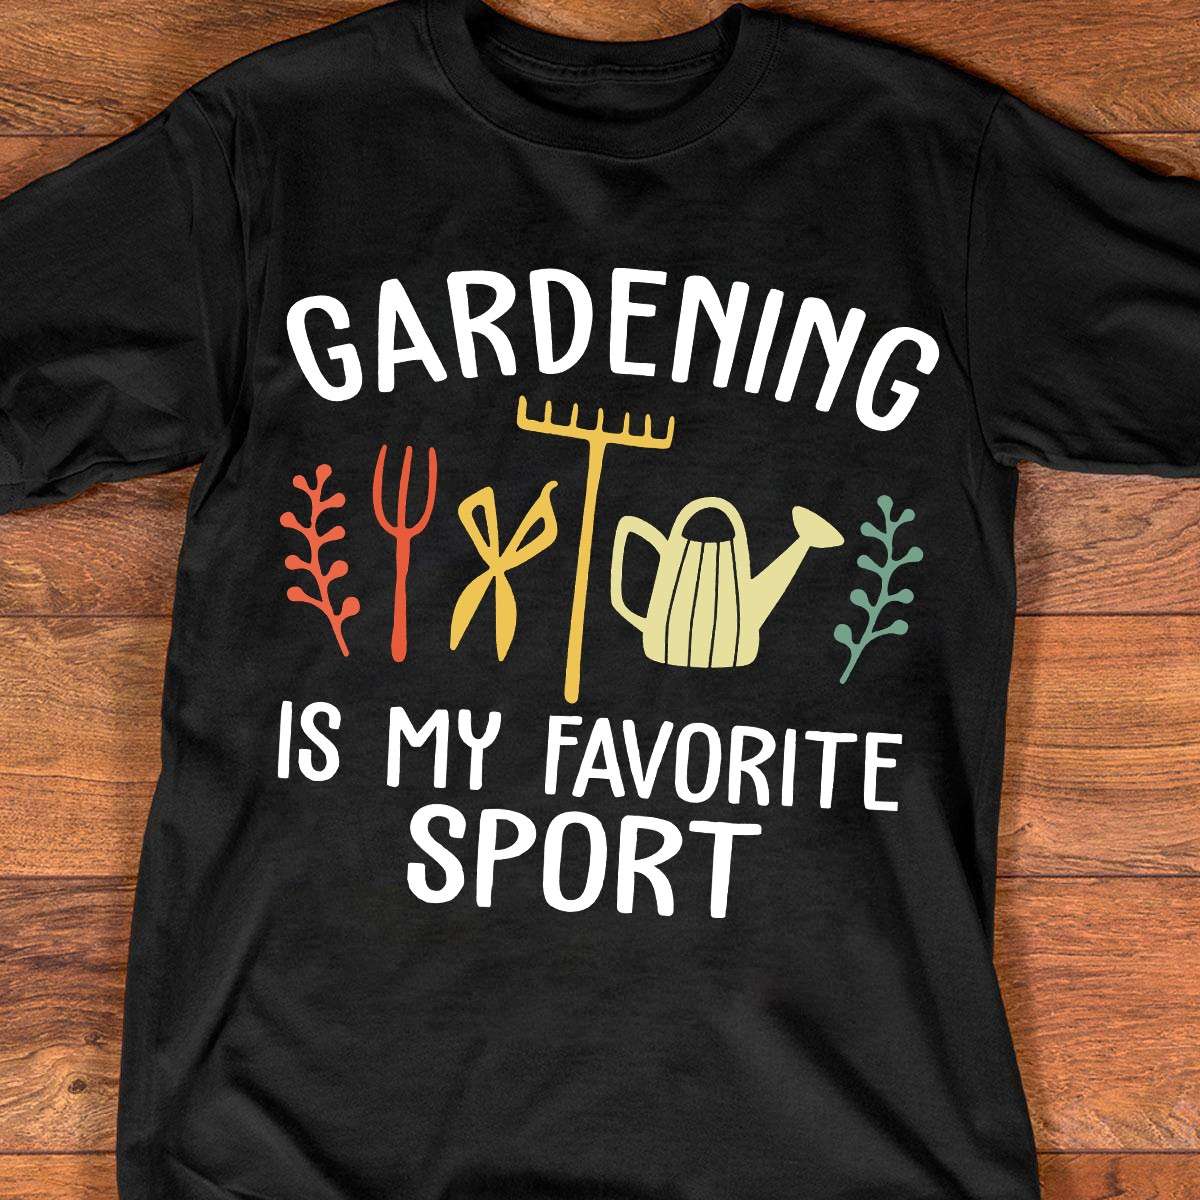 Gardening is my favorite sport - Love gardening, gardening and planting